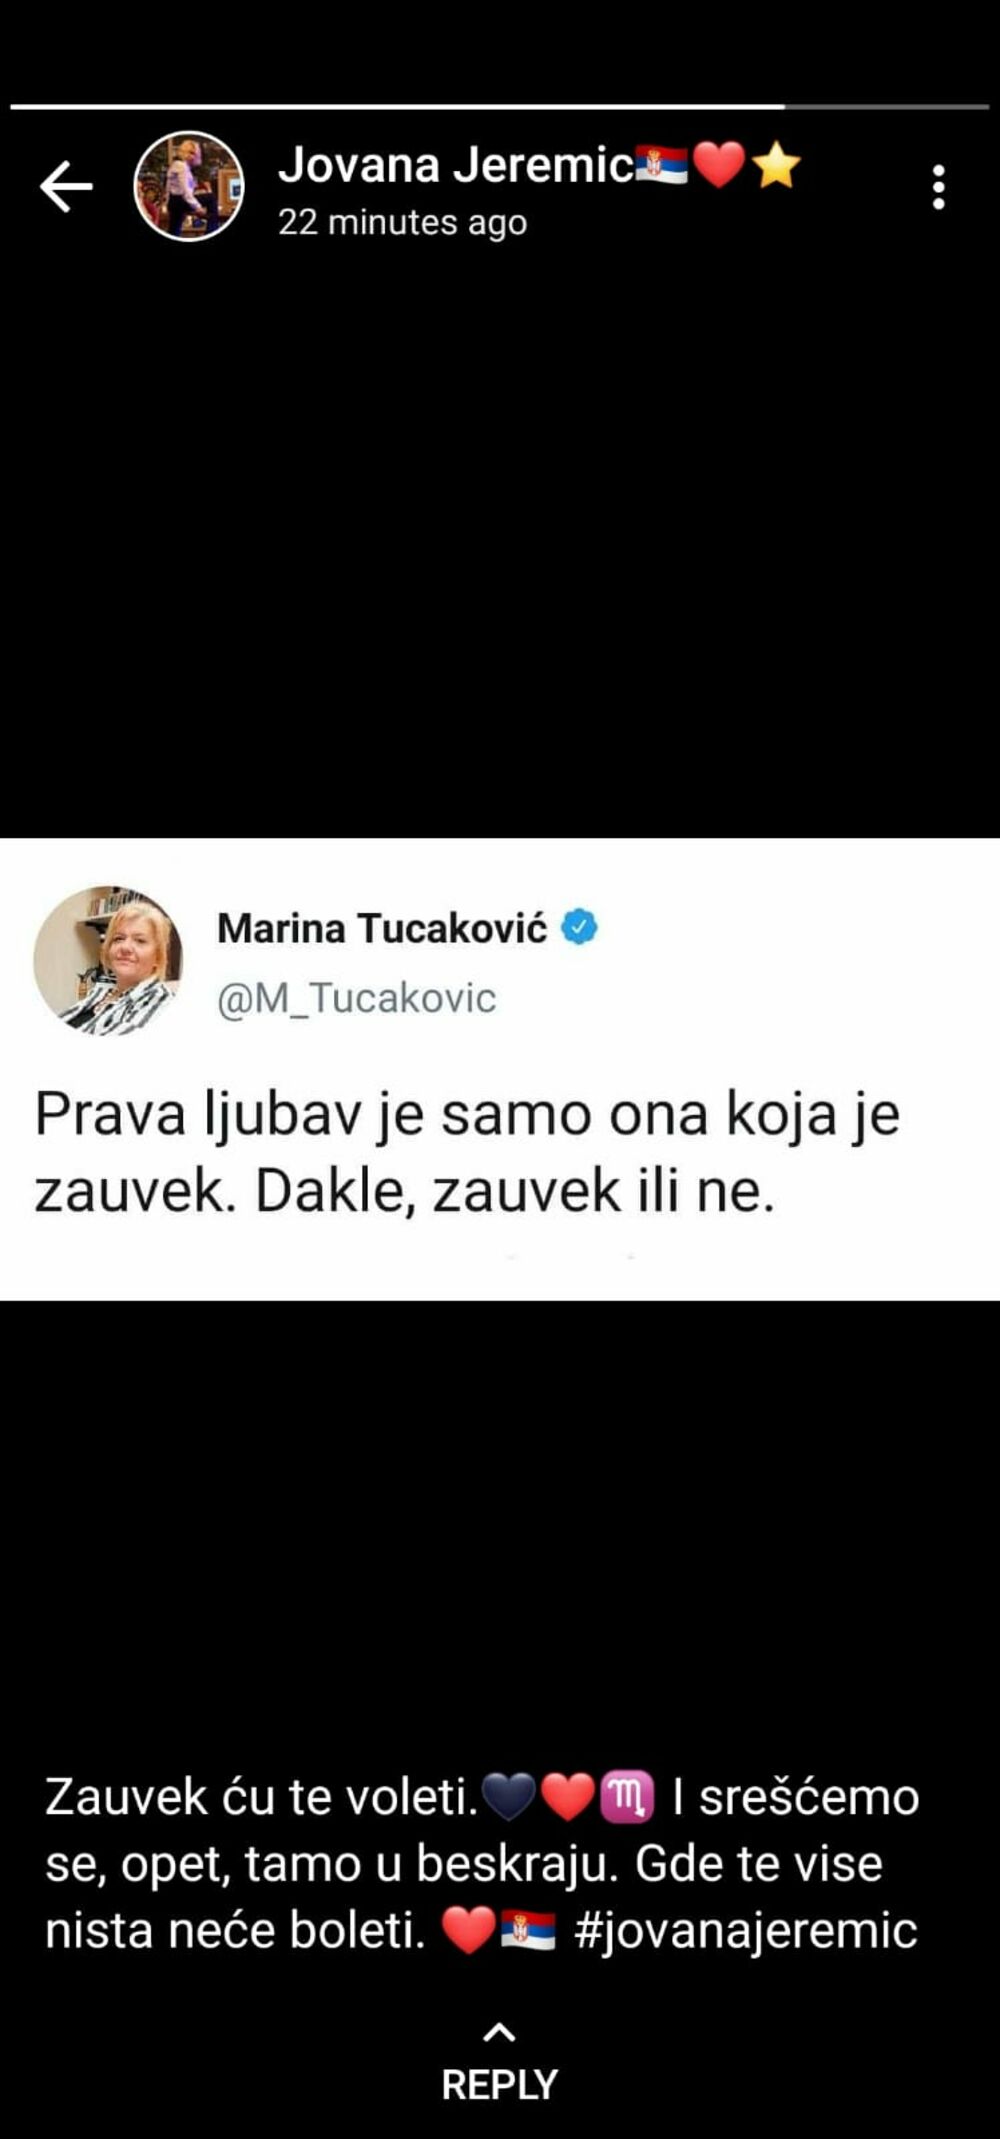 Jovana Jeremić, Marina Tucaković